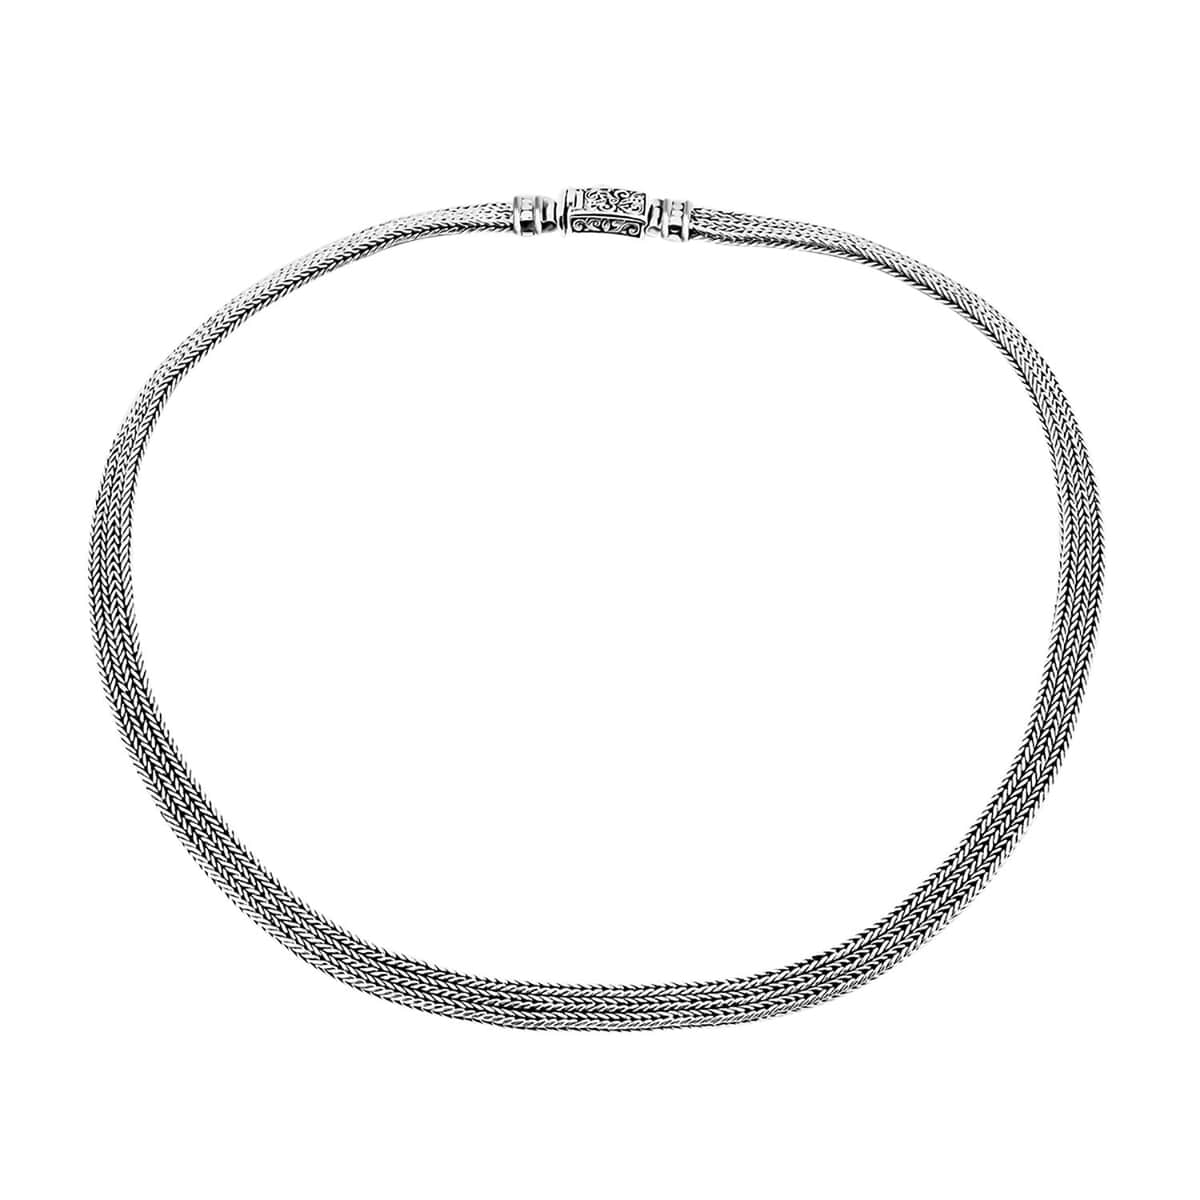 Bali Legacy Sterling Silver Tulang Naga Necklace (20 Inches) 68.75 Grams image number 0